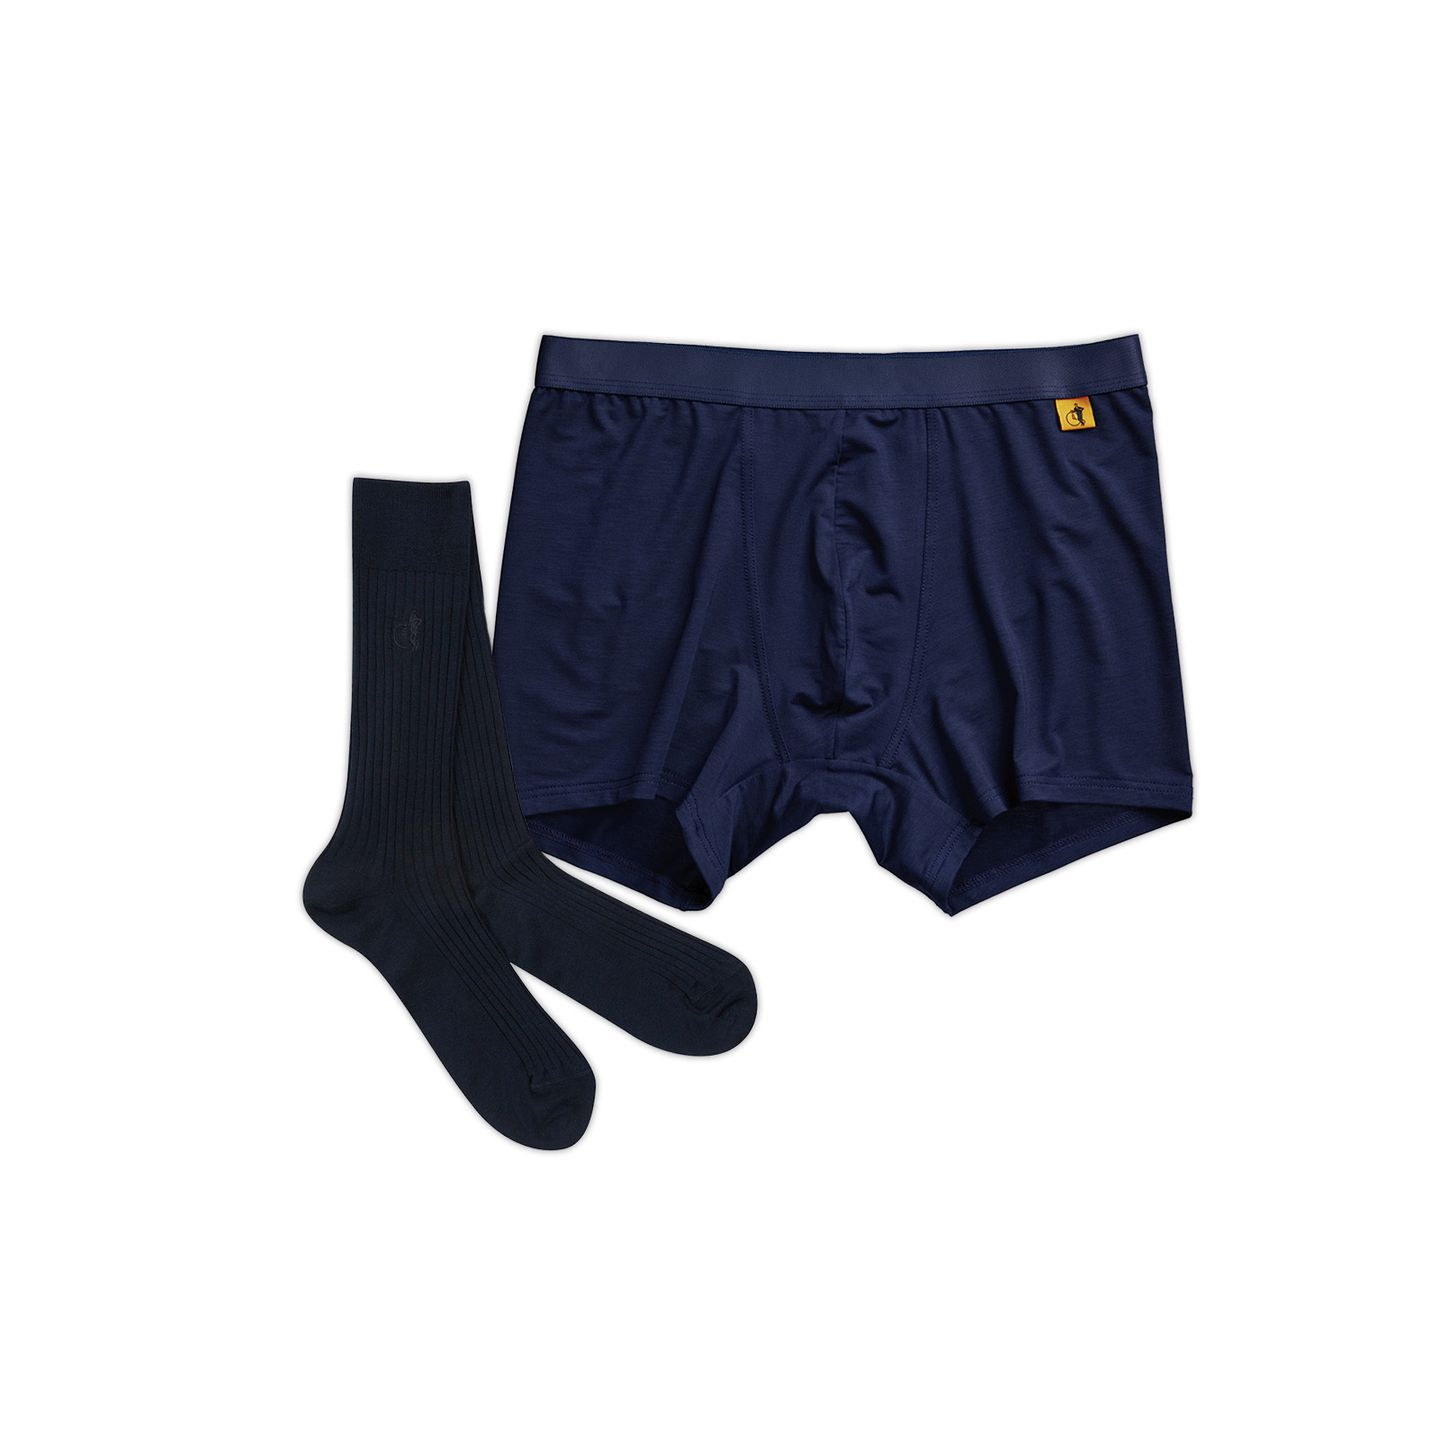 Boxer and sock bundle in navy, with dark navy sartorial socks